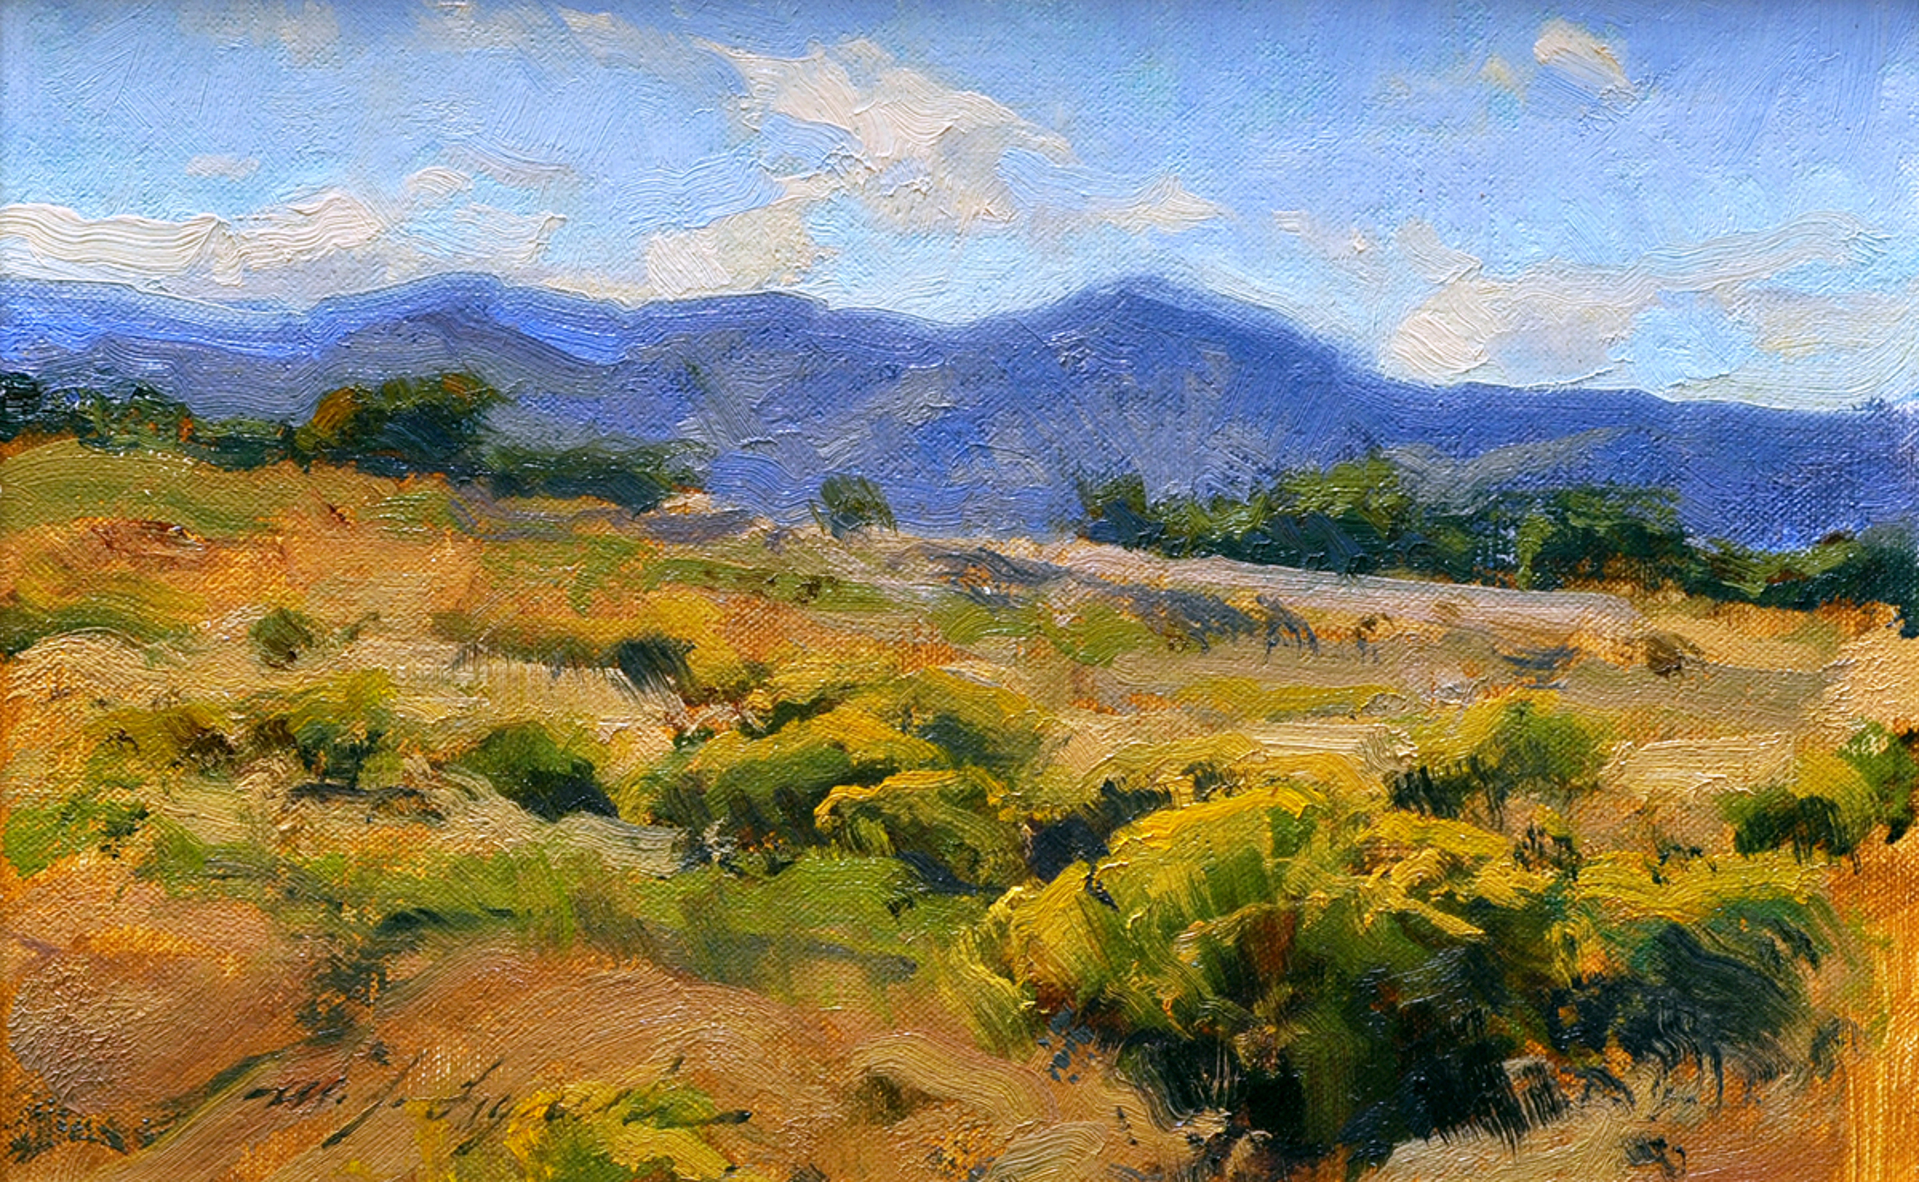 Colorado Prairie in August by Michael J Lynch